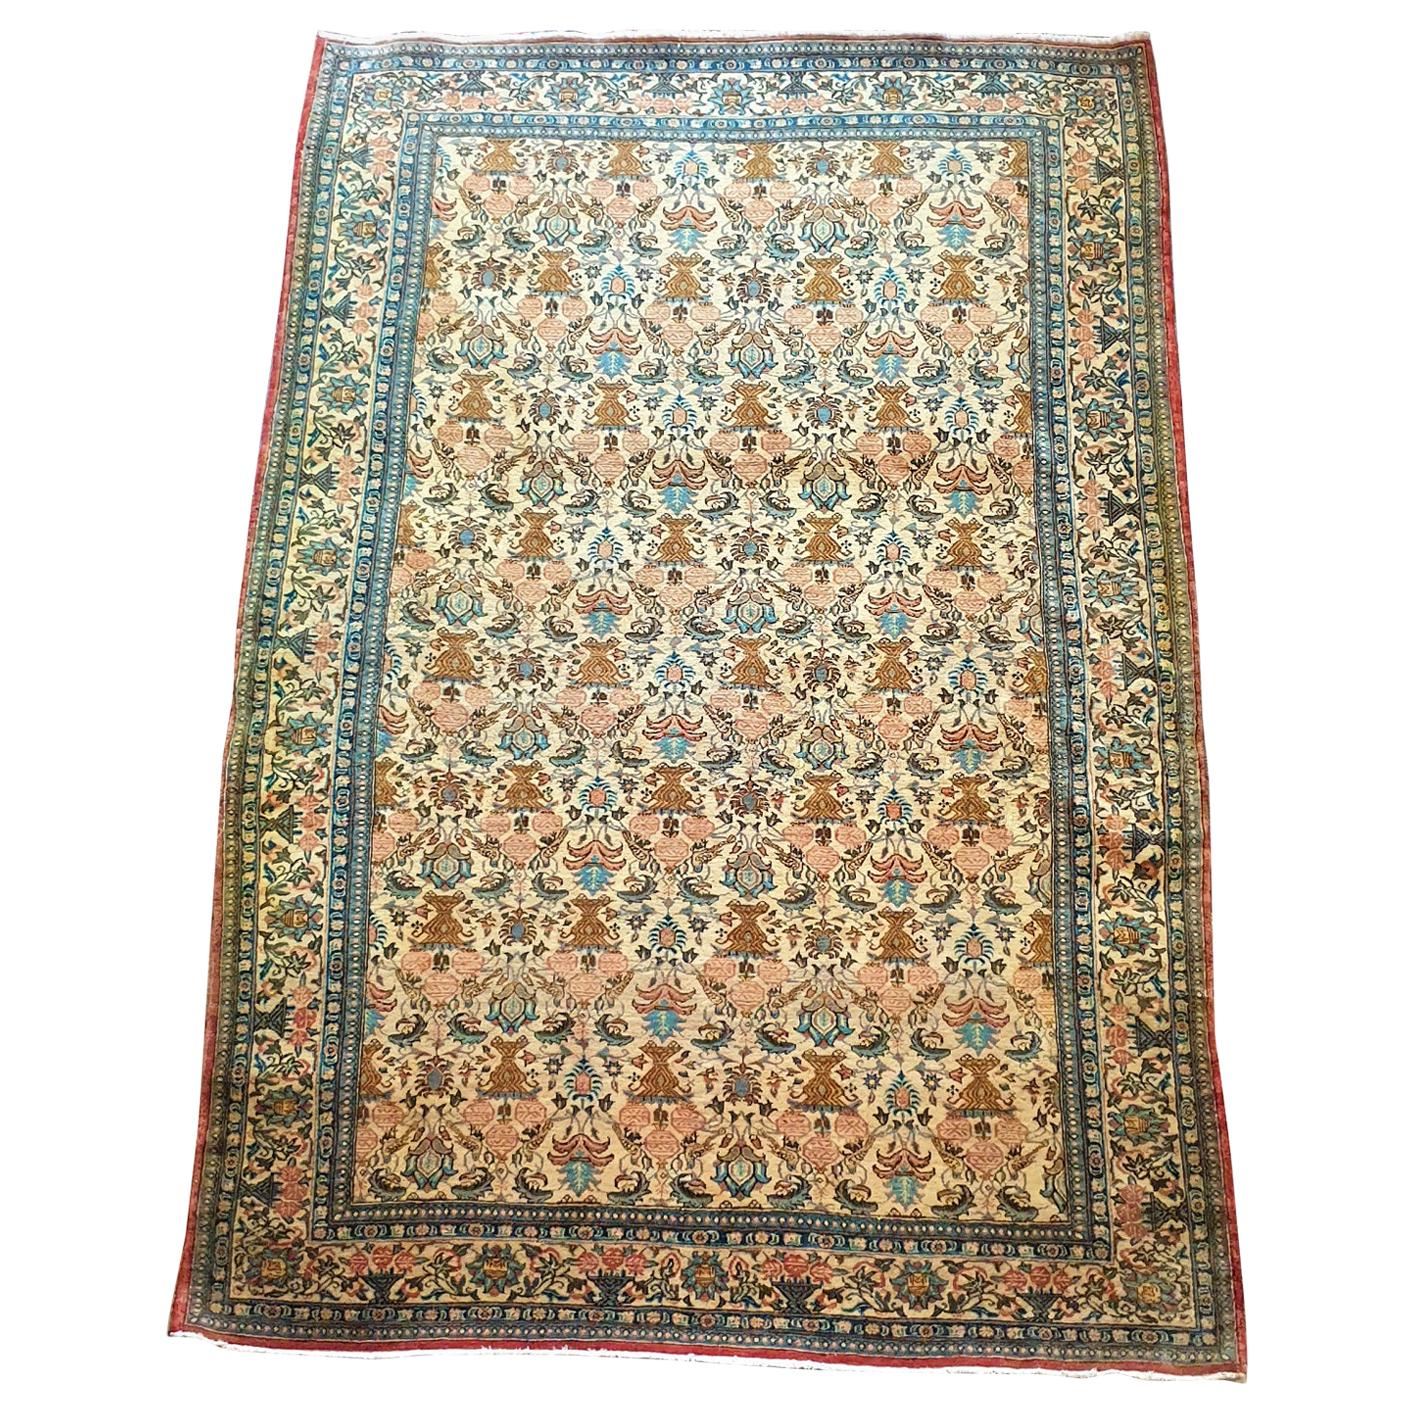 916 - Beautiful vintage Qom rug For Sale